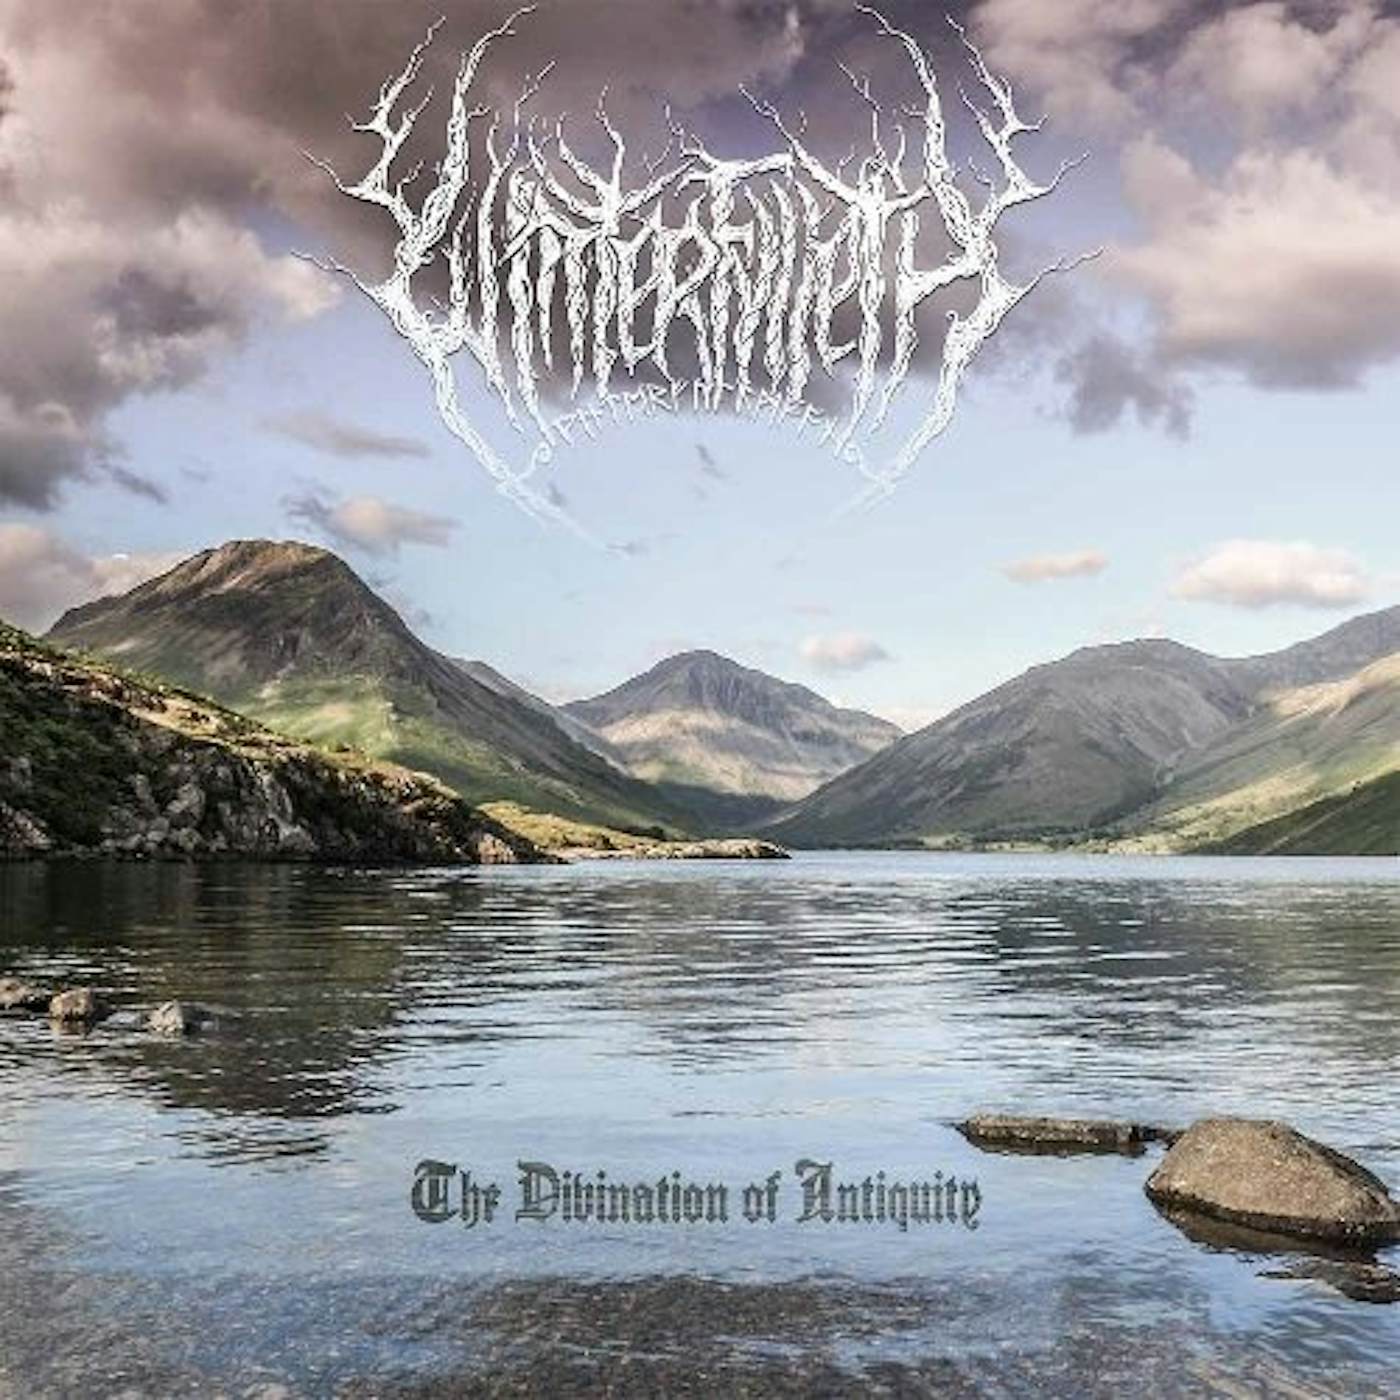 Winterfylleth DIVINATION OF ANTIQUITY (UK) (Vinyl)